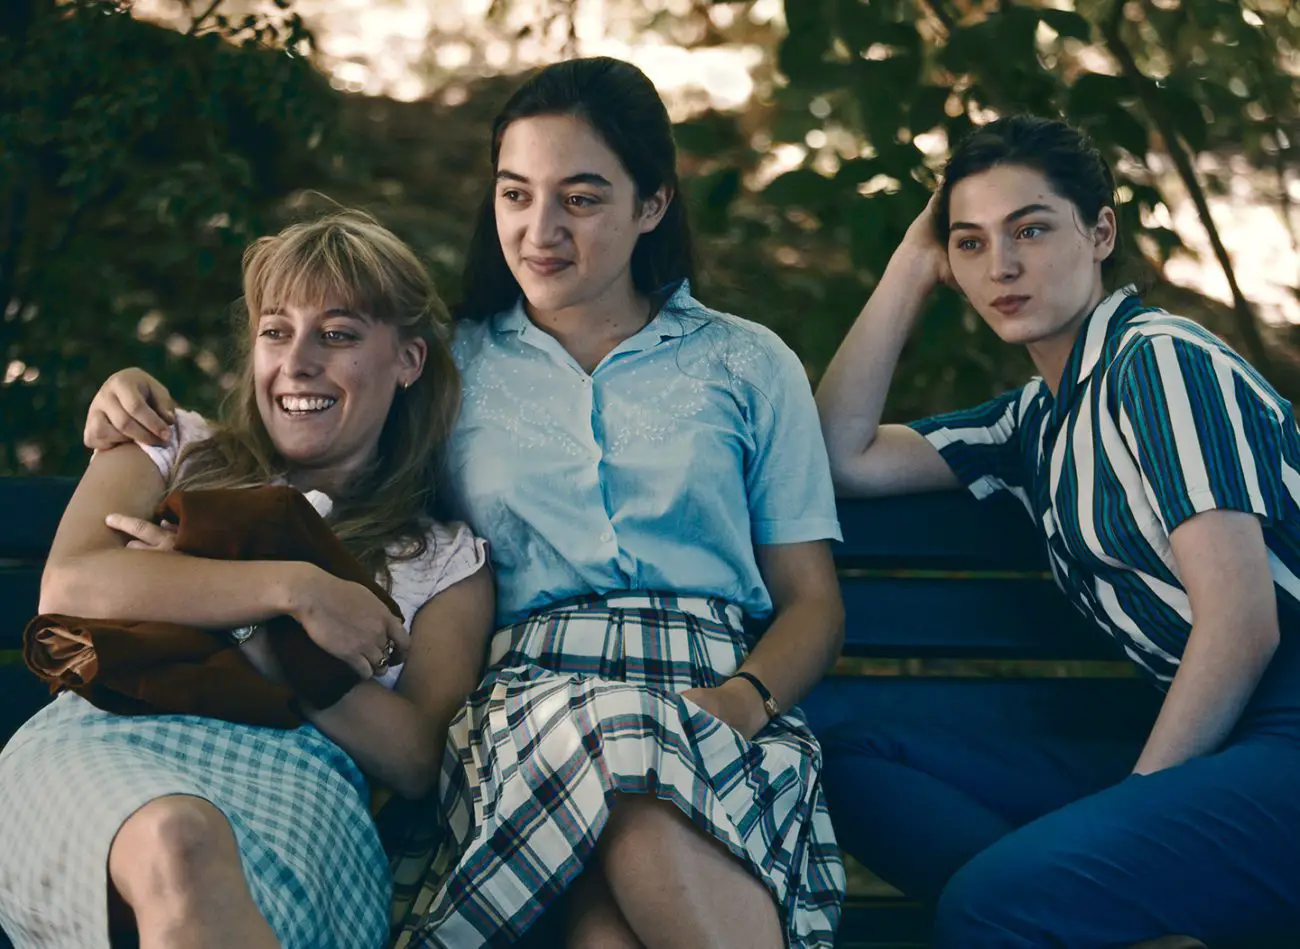 Three high-school friends sitting on a park bench watching the boys: Brigitte (Louise Orry-Diquéro), Helene (Luana Bajrami) and Anne (Anamaria Vartolomei)